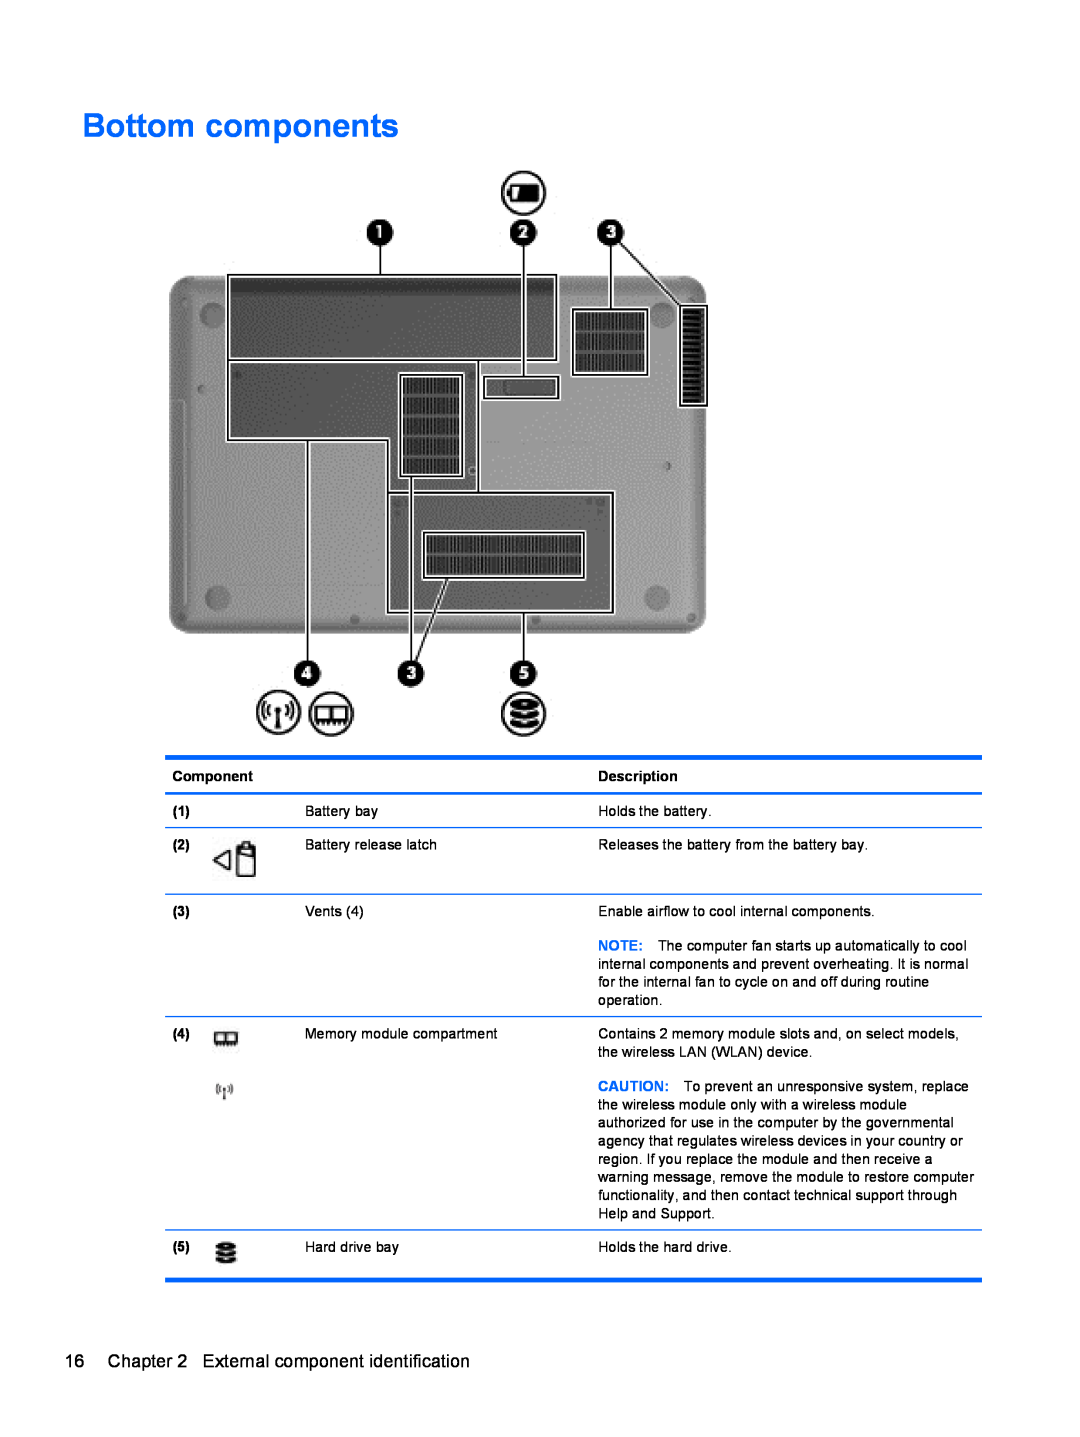 Compaq CQ42 manual Bottom components, External component identification 